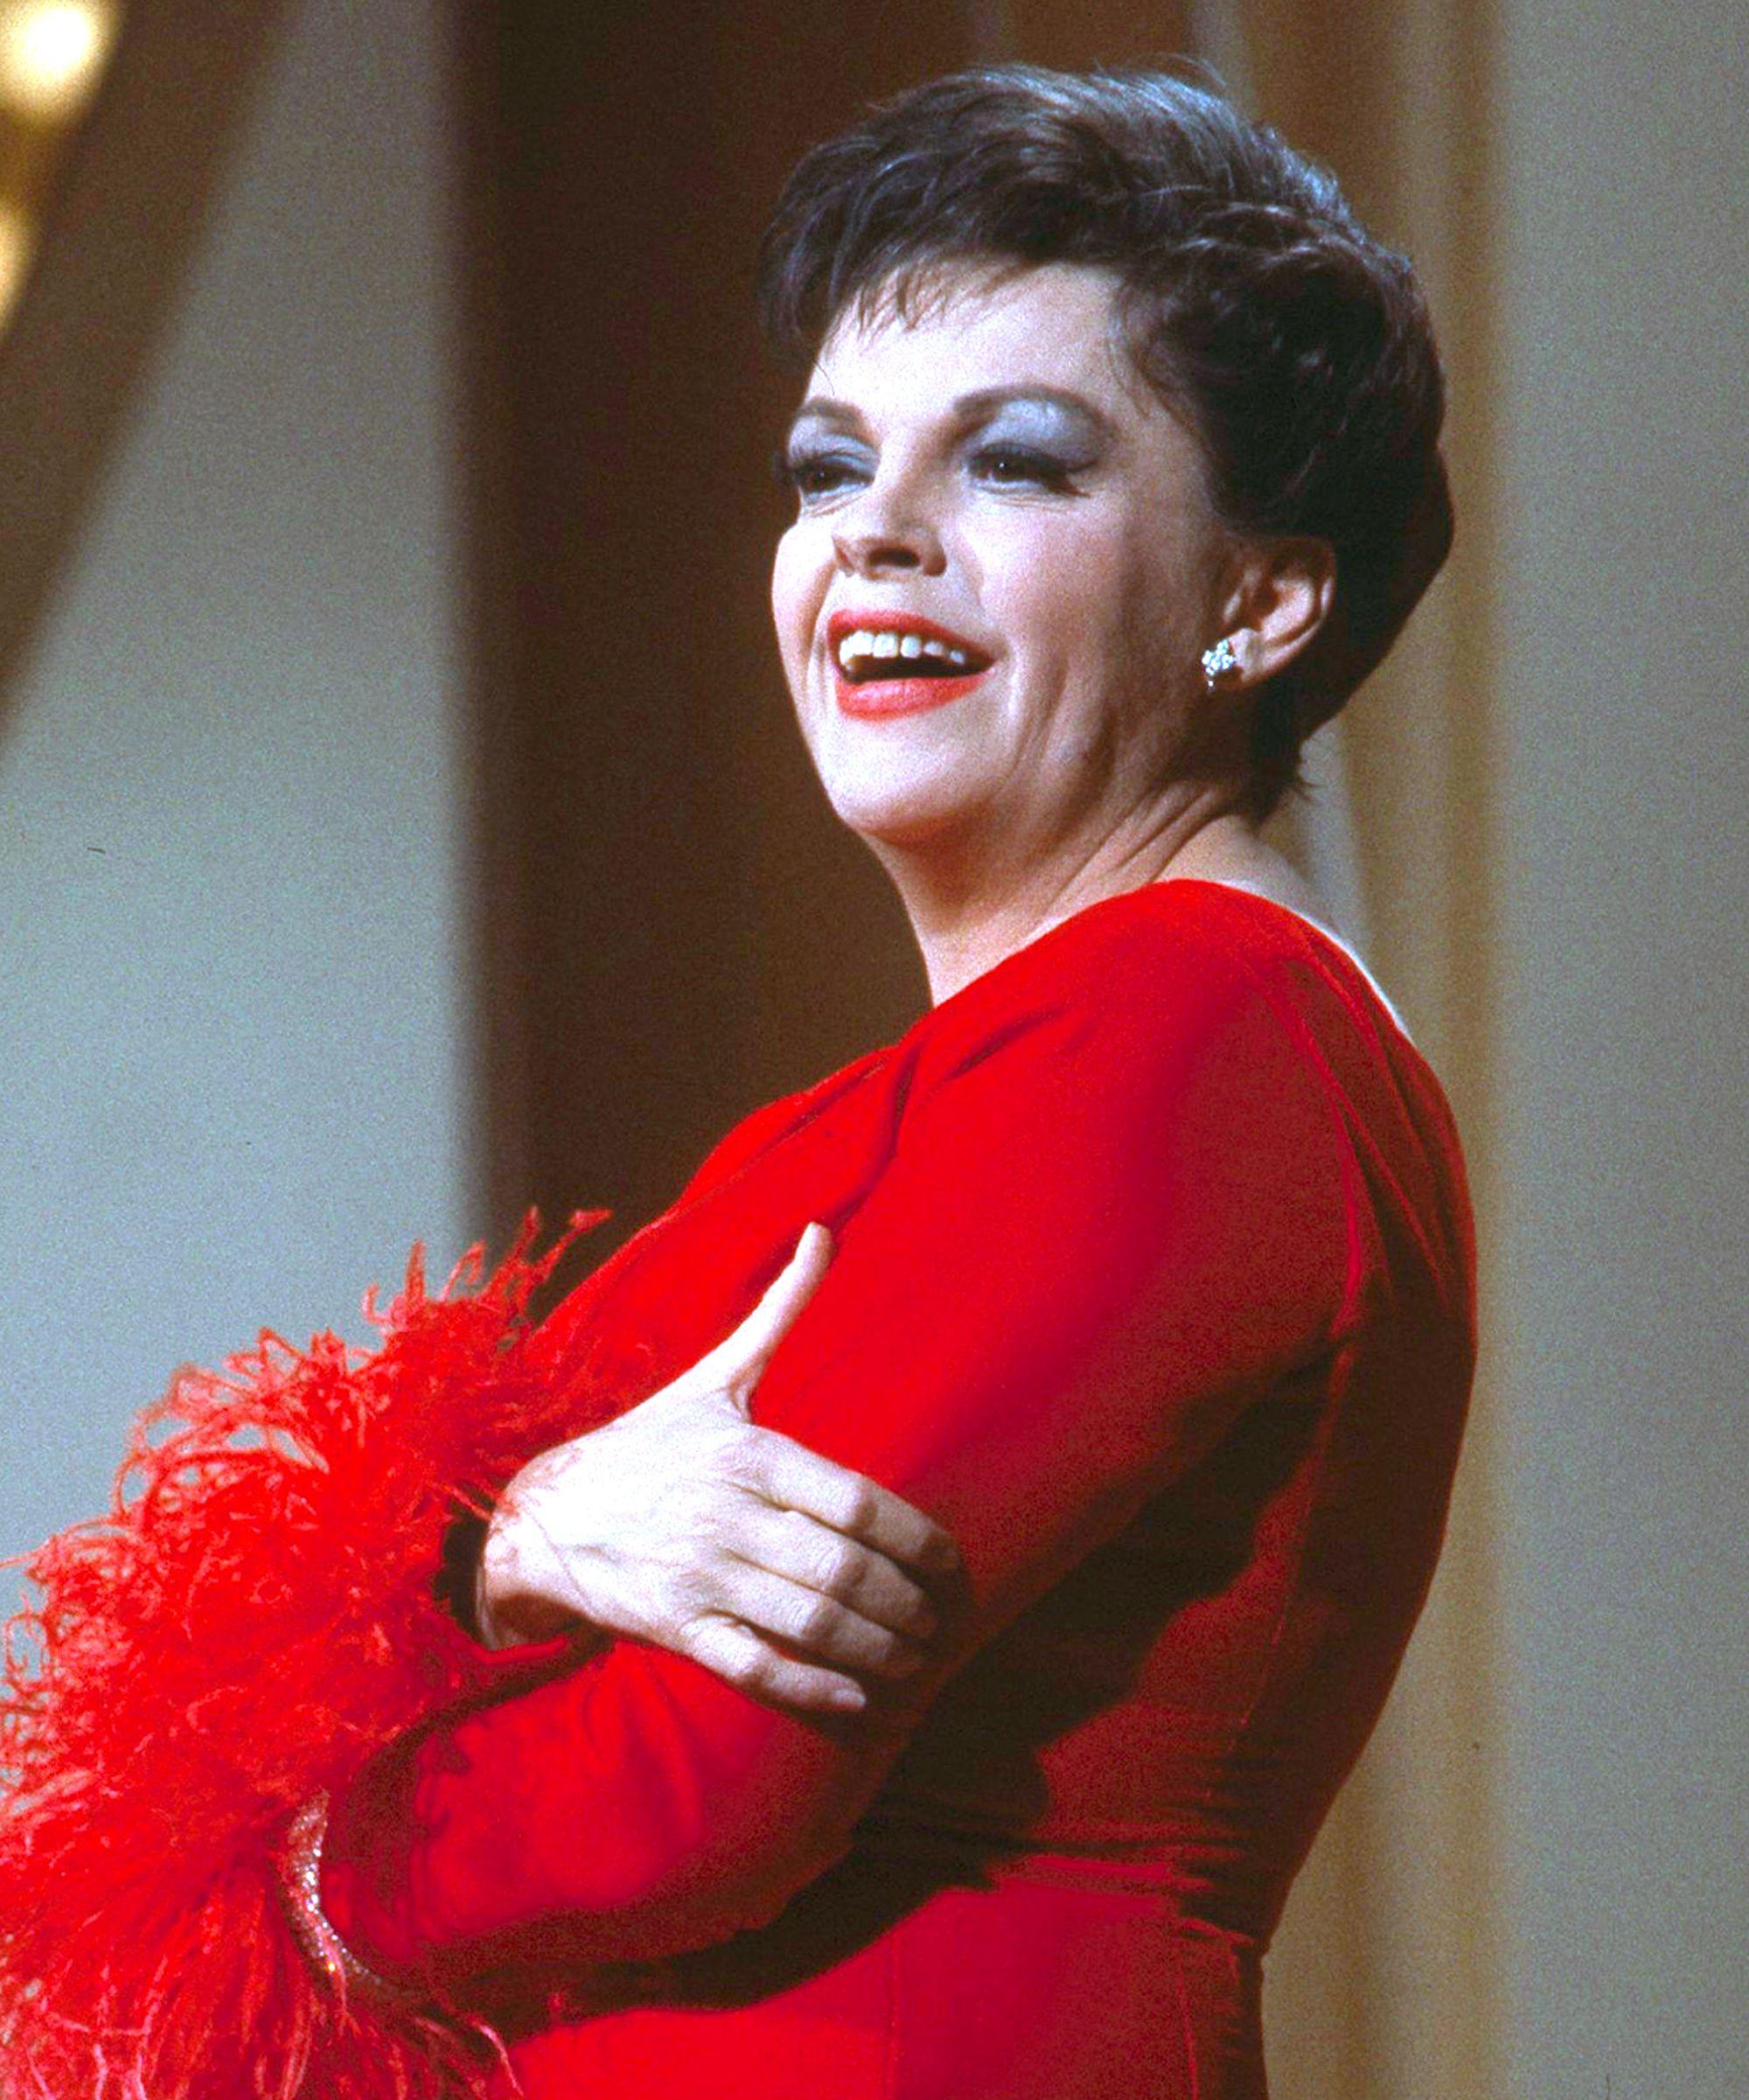 New Judy Garland Movie Starring Renee Zellweger